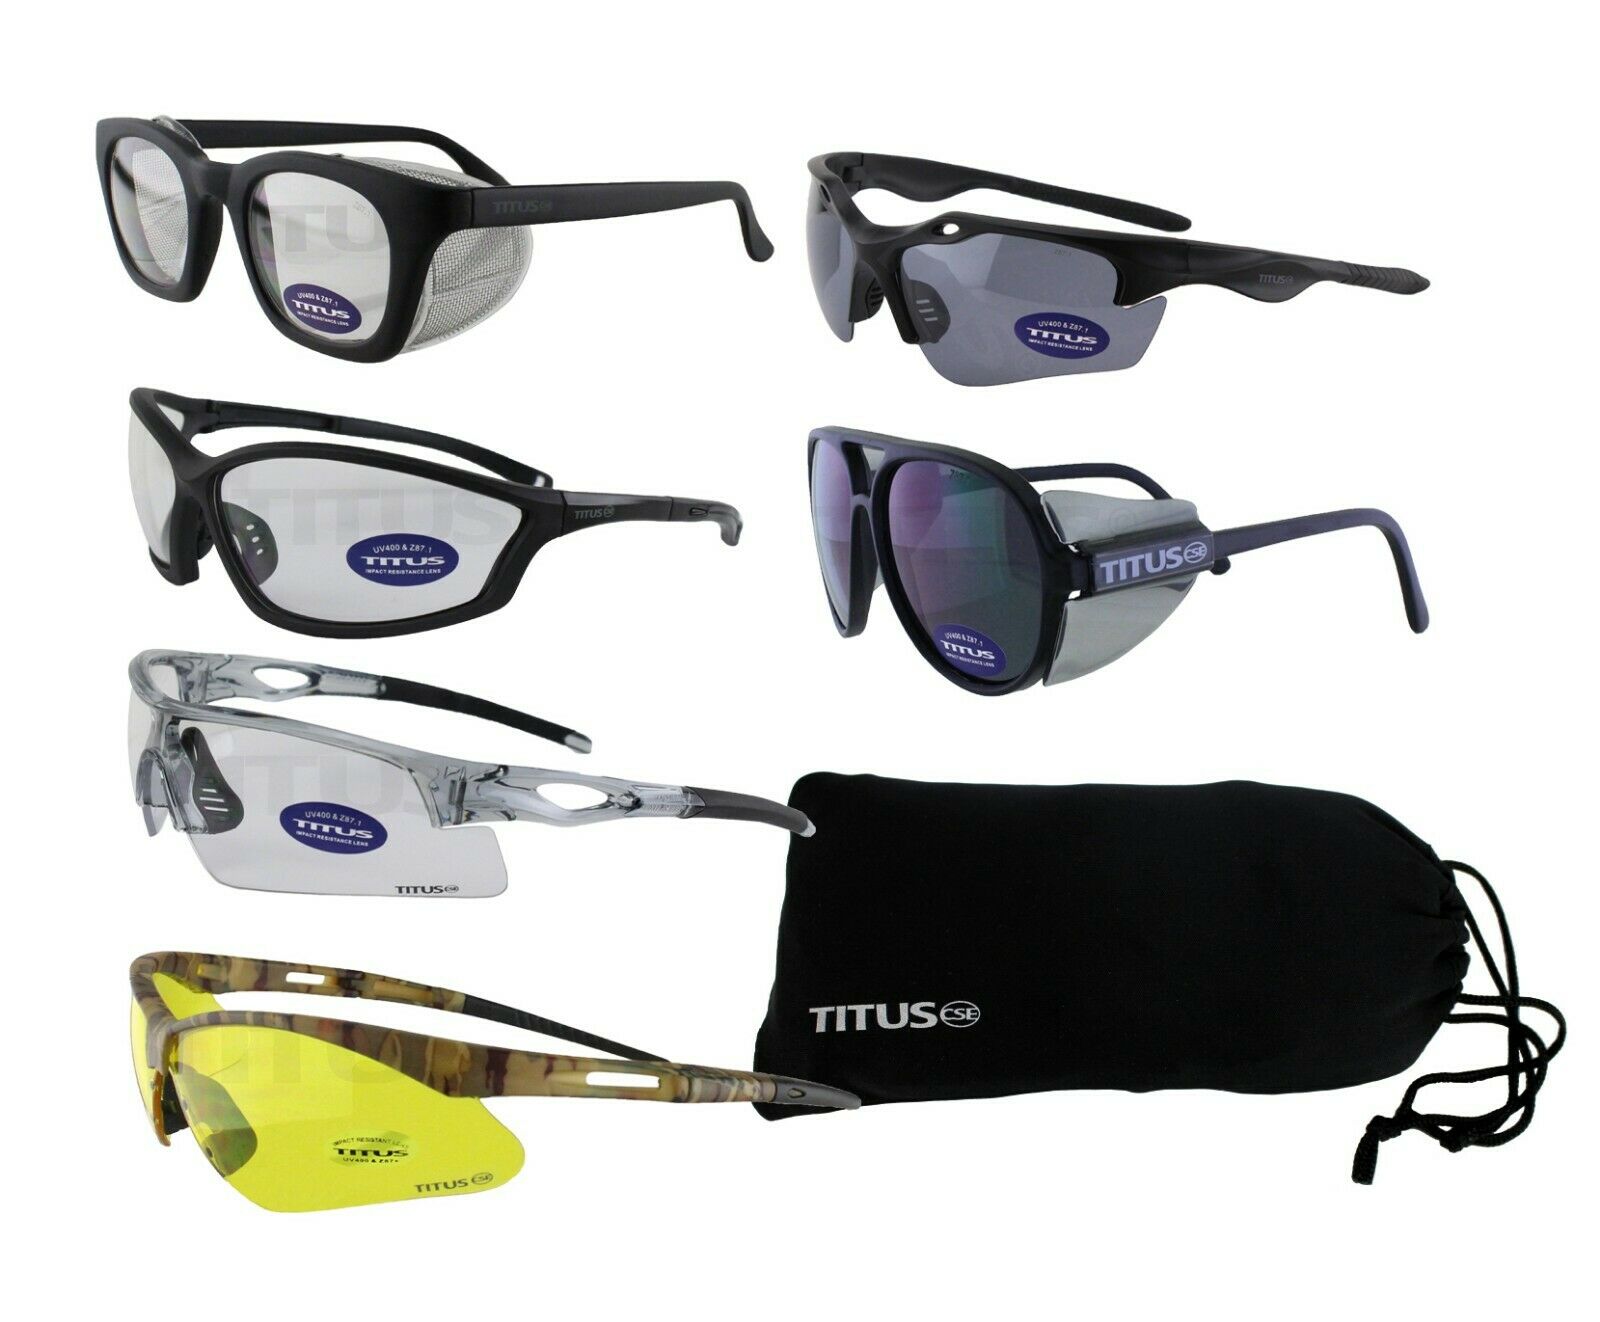 Titus G-series Safety Glasses Shooting Range Riding Eye Protection Ansi Z87 Usa